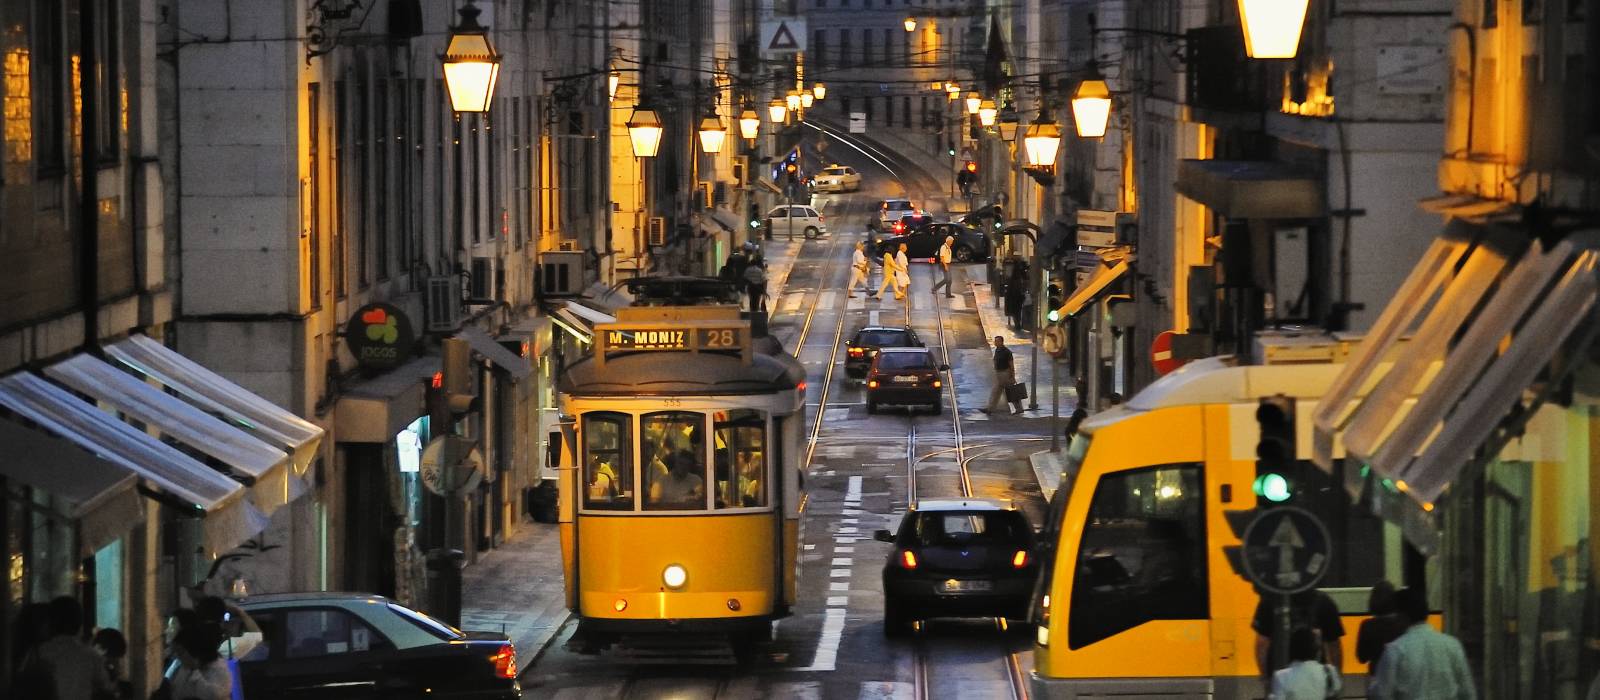 Offerte Hotel Lisbon Baixa - Vincci Hoteles - Soggiorna 3 notti e risparmia